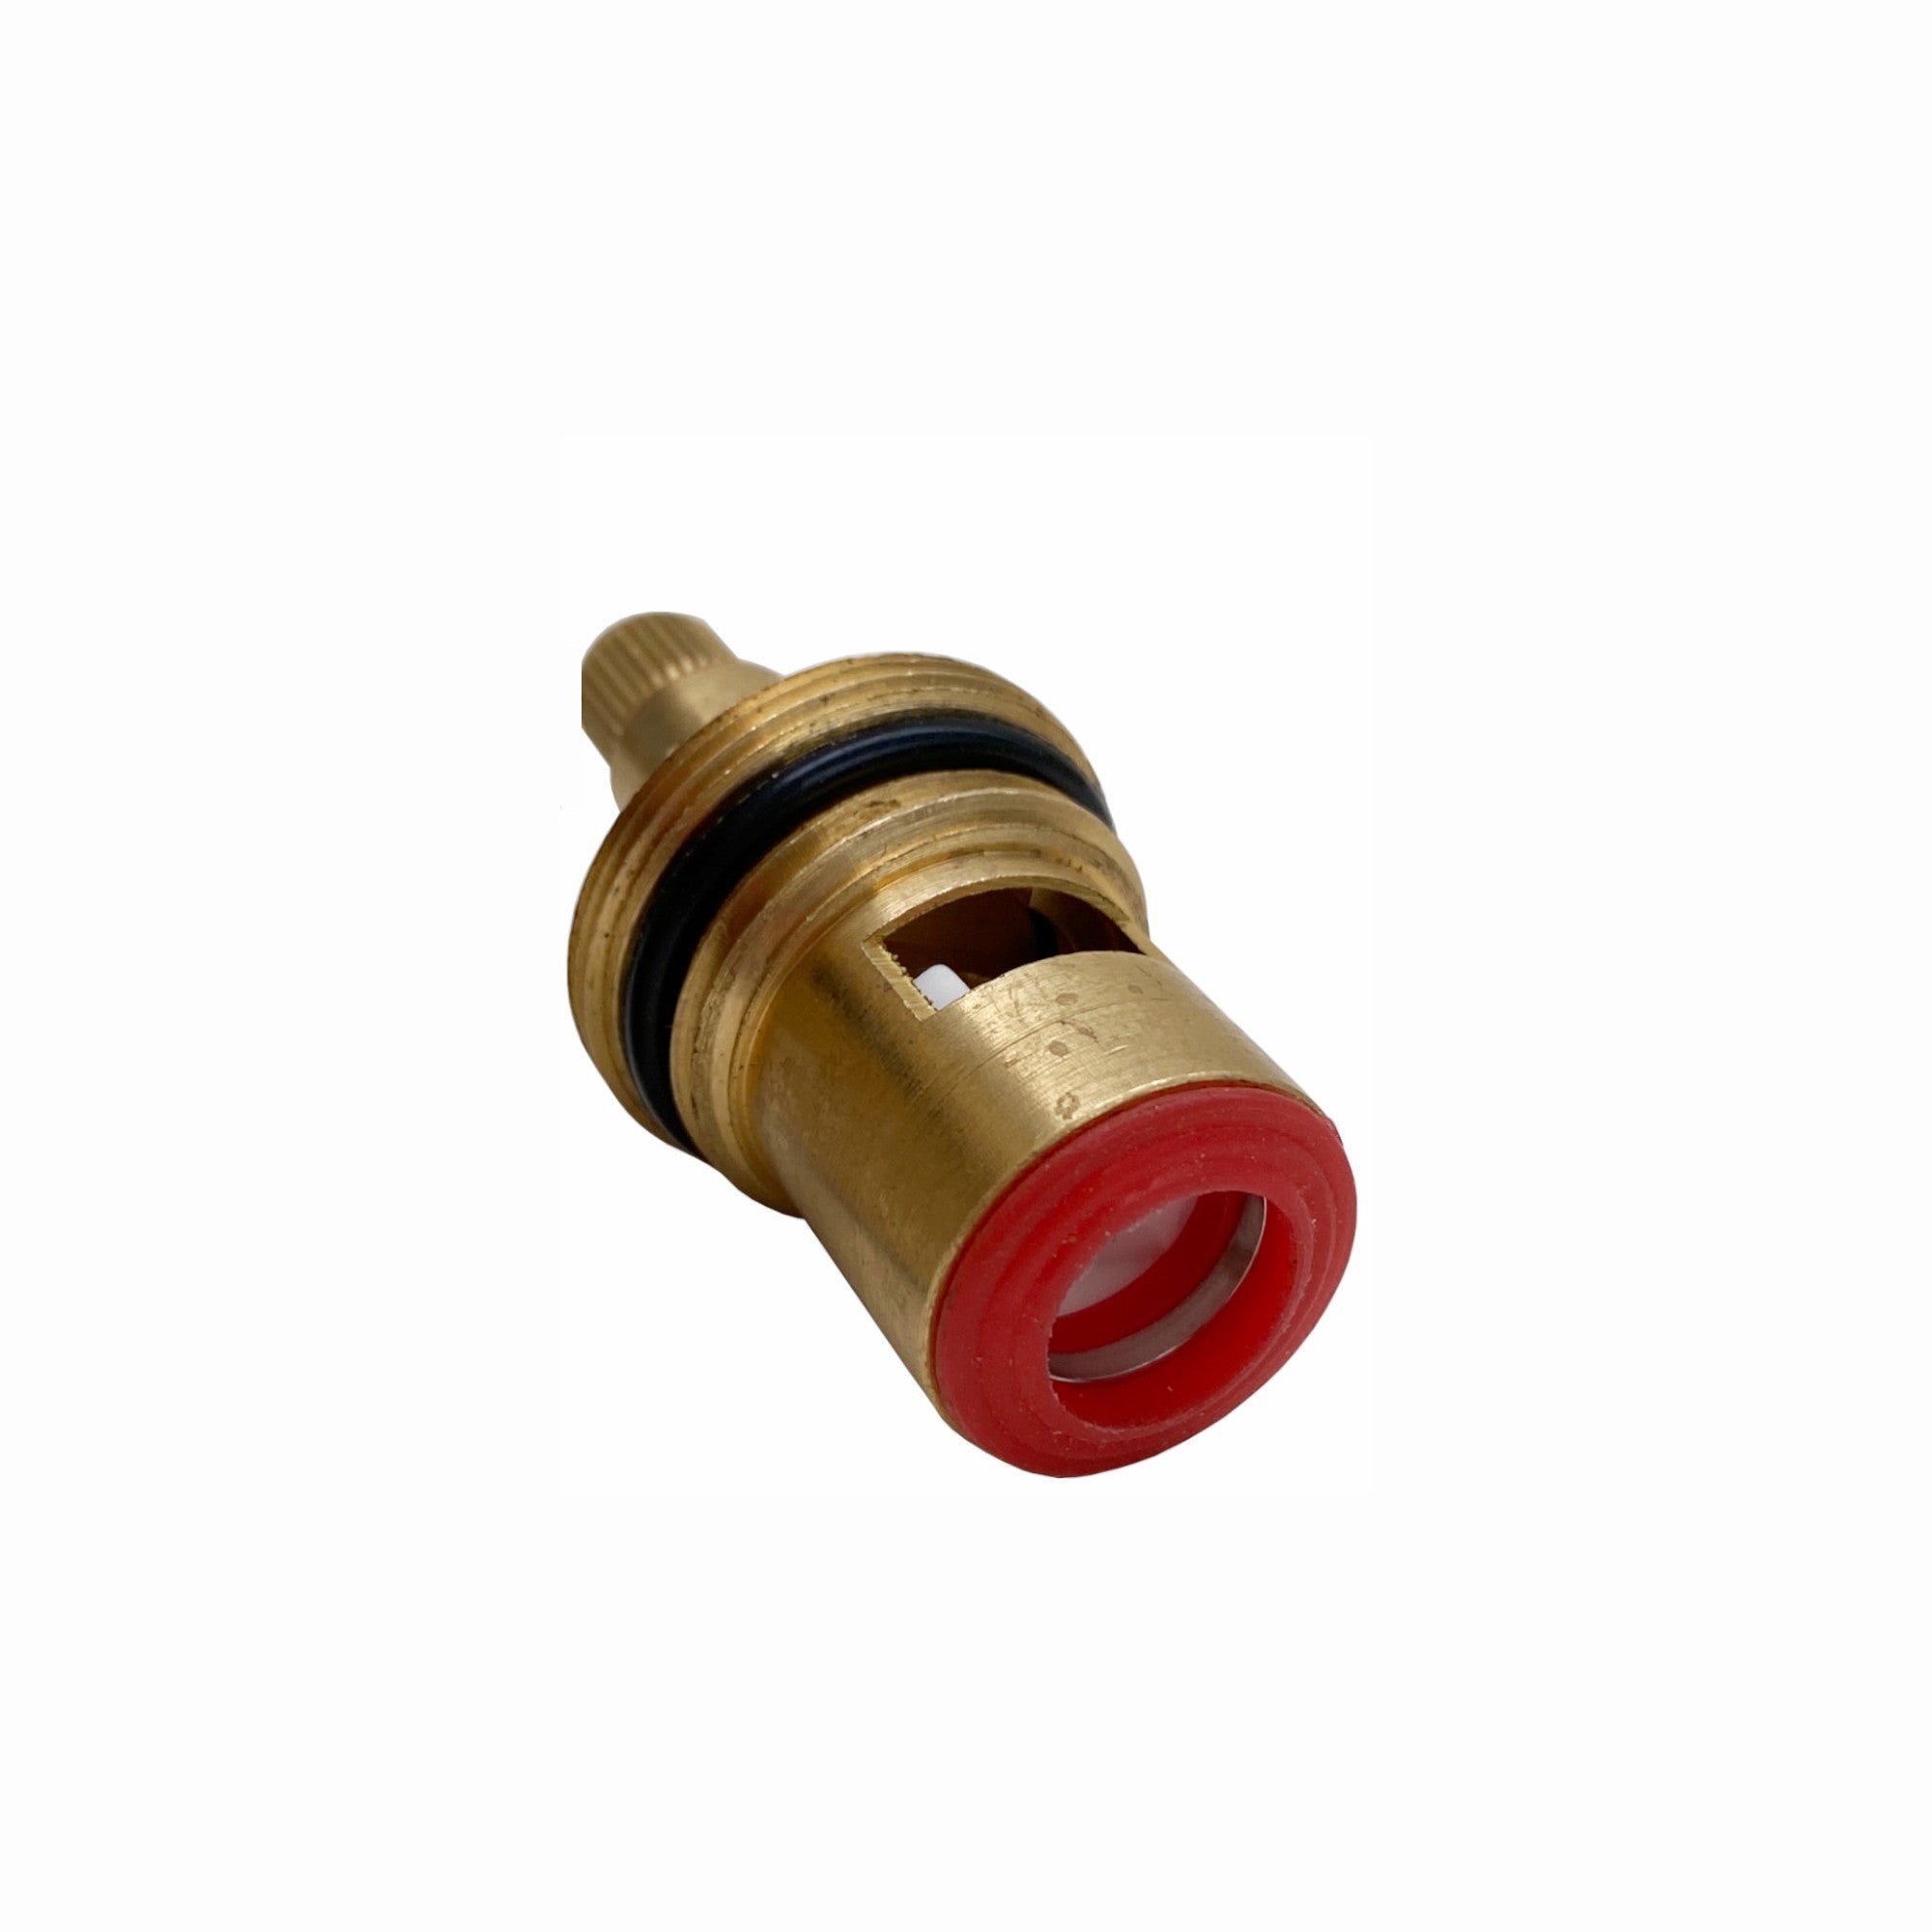 Ceramic disc brass valve 1/2", quarter turn - Astbury, Brompton - HOT